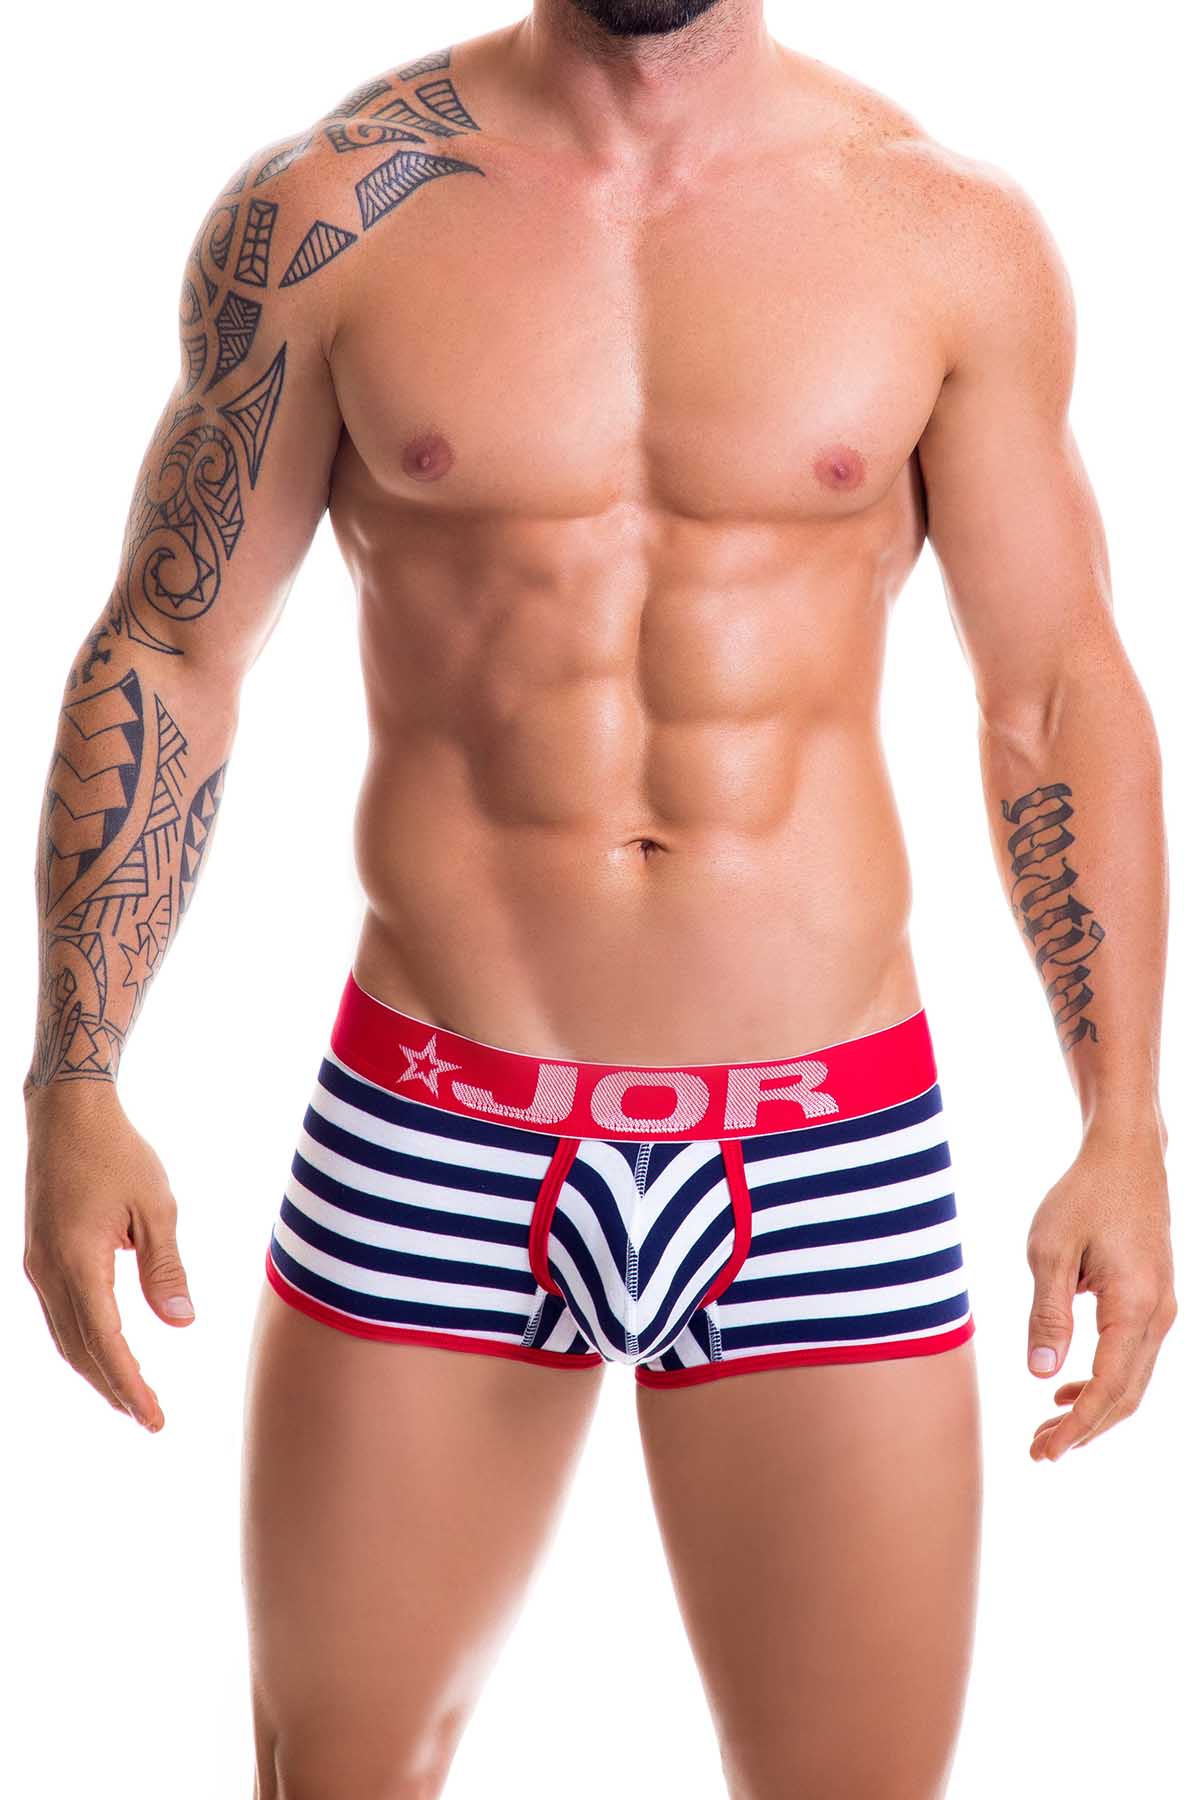 Jor Navy-Stripe Boxer Trunk